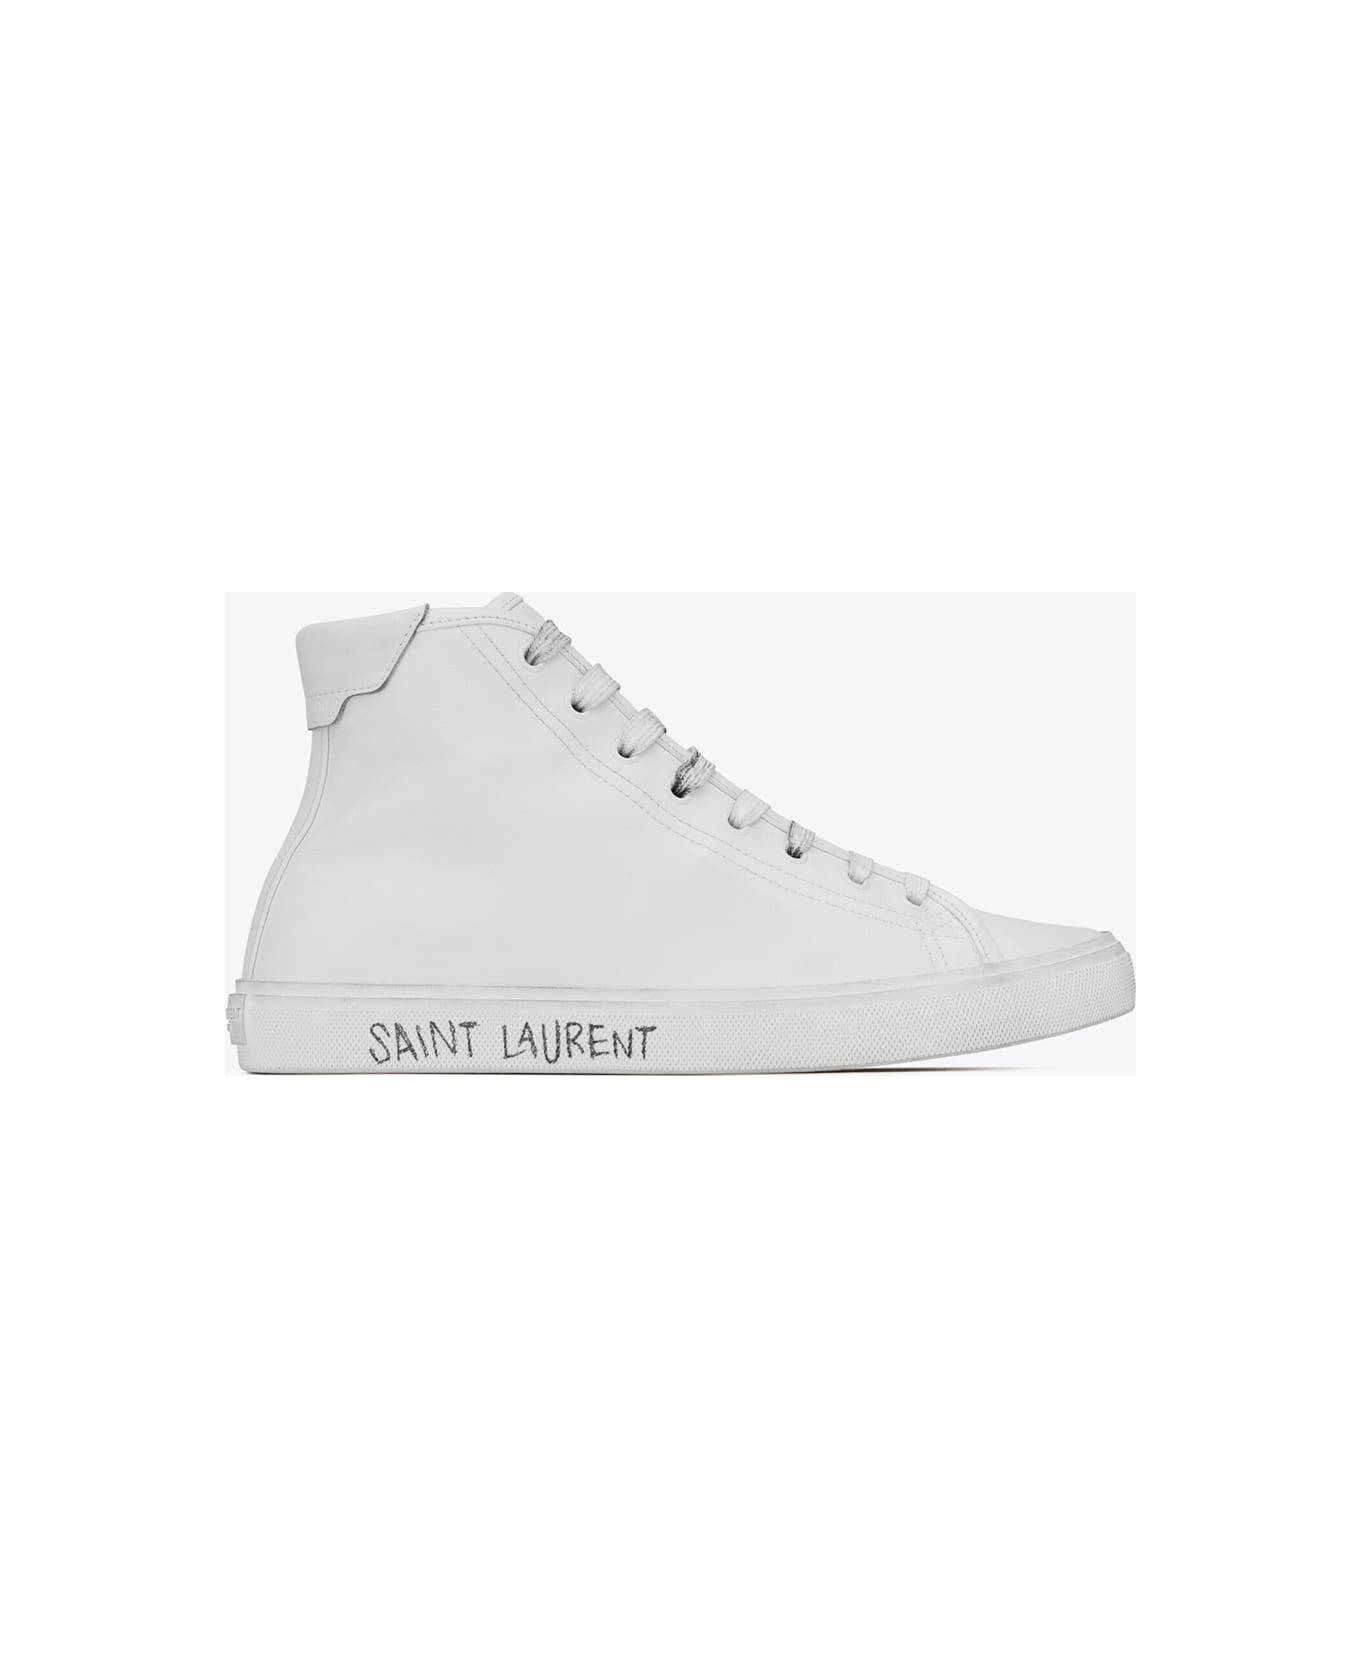 Saint Laurent Malibu White Sneakers - White